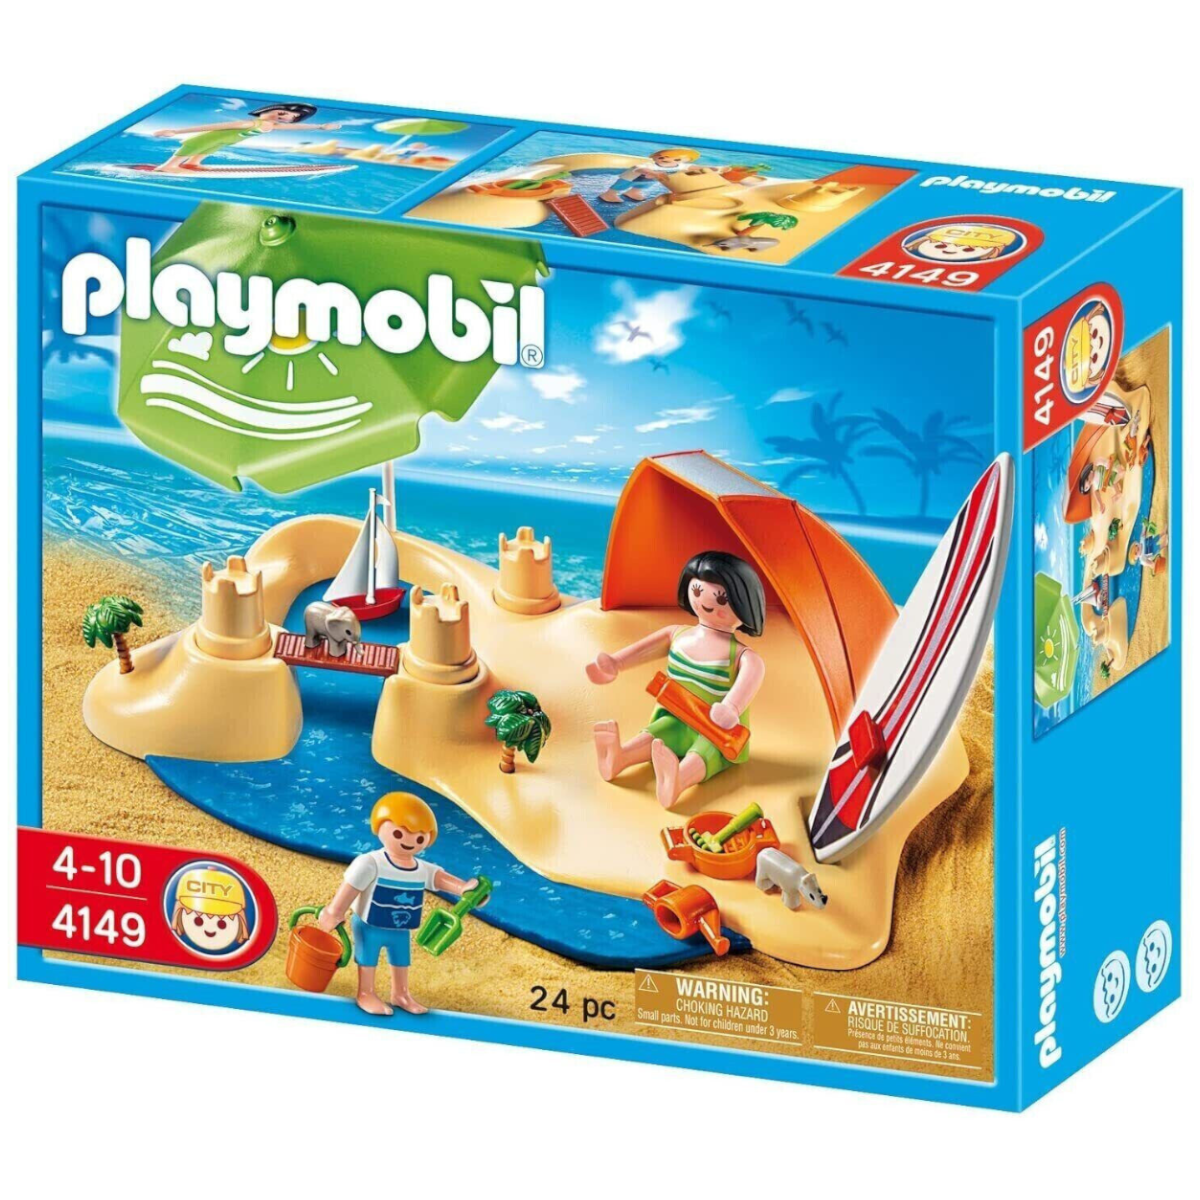 Playmobil 4149 - City Life - Strandurlaub Ferien Meer Sommerurlaub